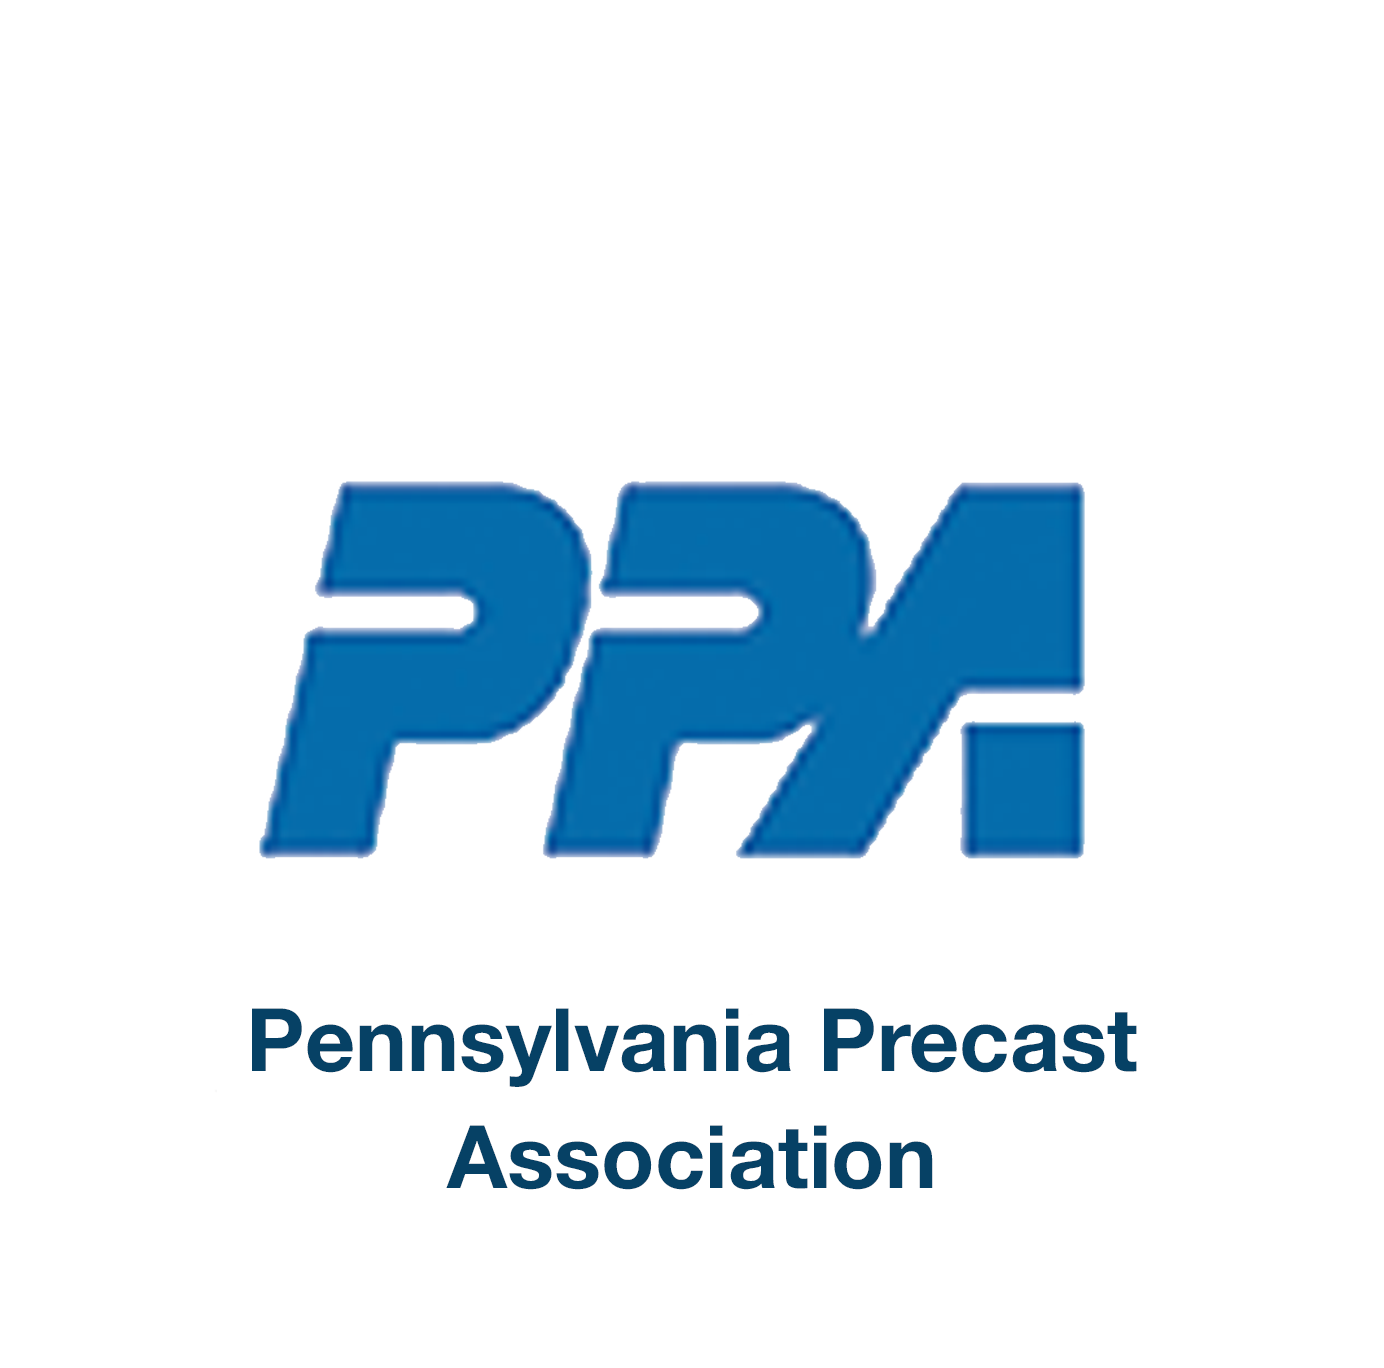 PPA (Pennsylvania Precast Association) 